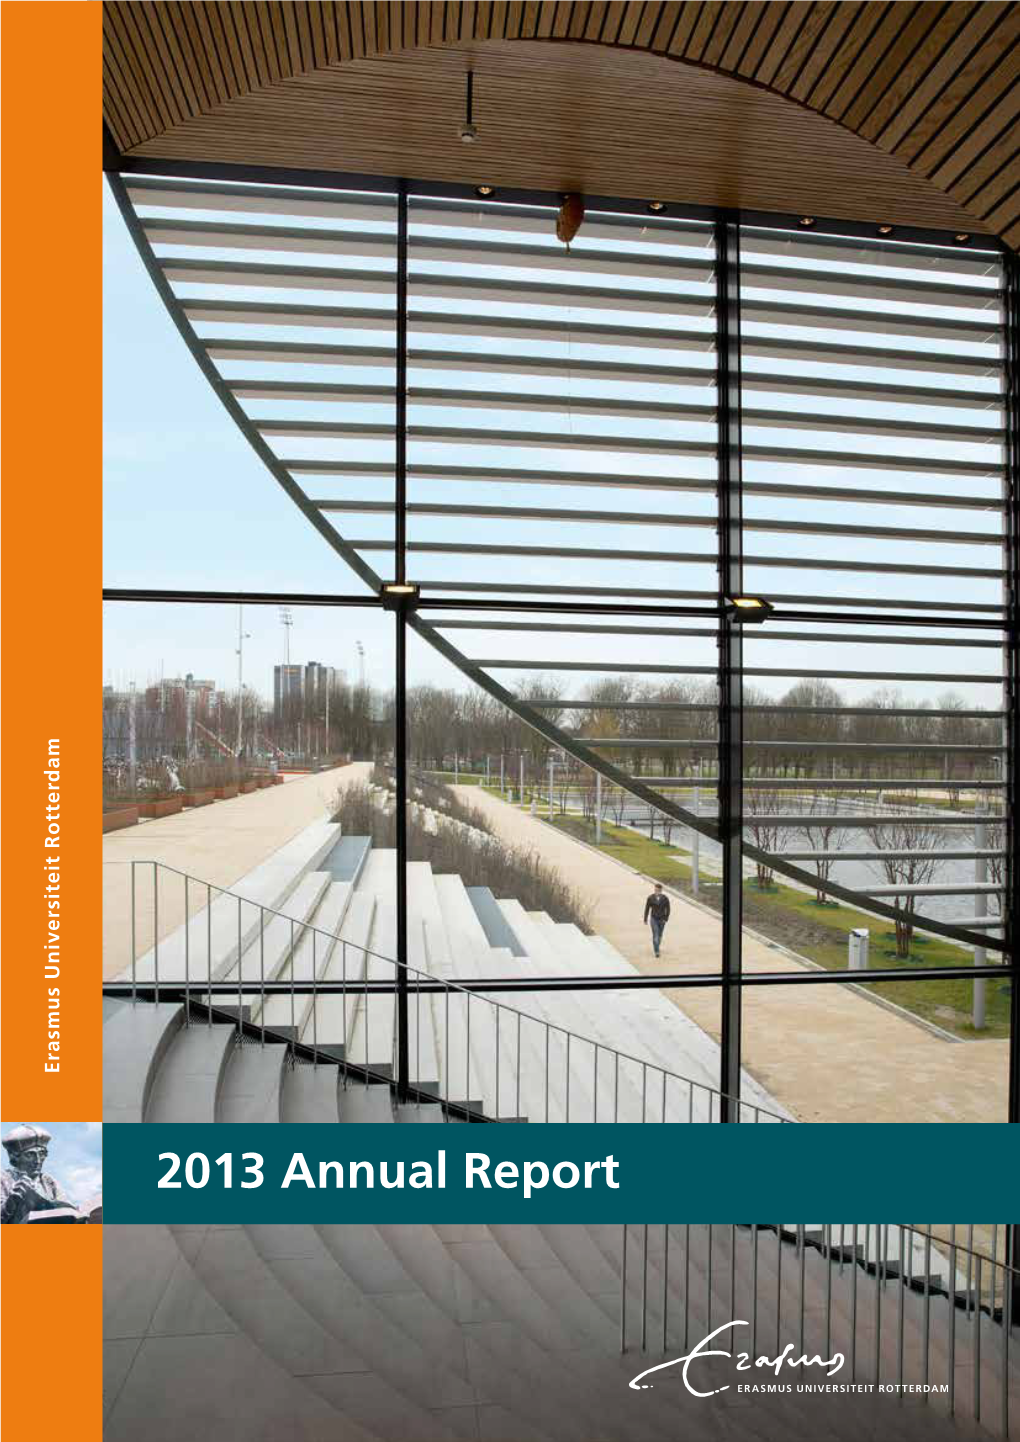 2013 Annual Report Content 2013 Annual Report